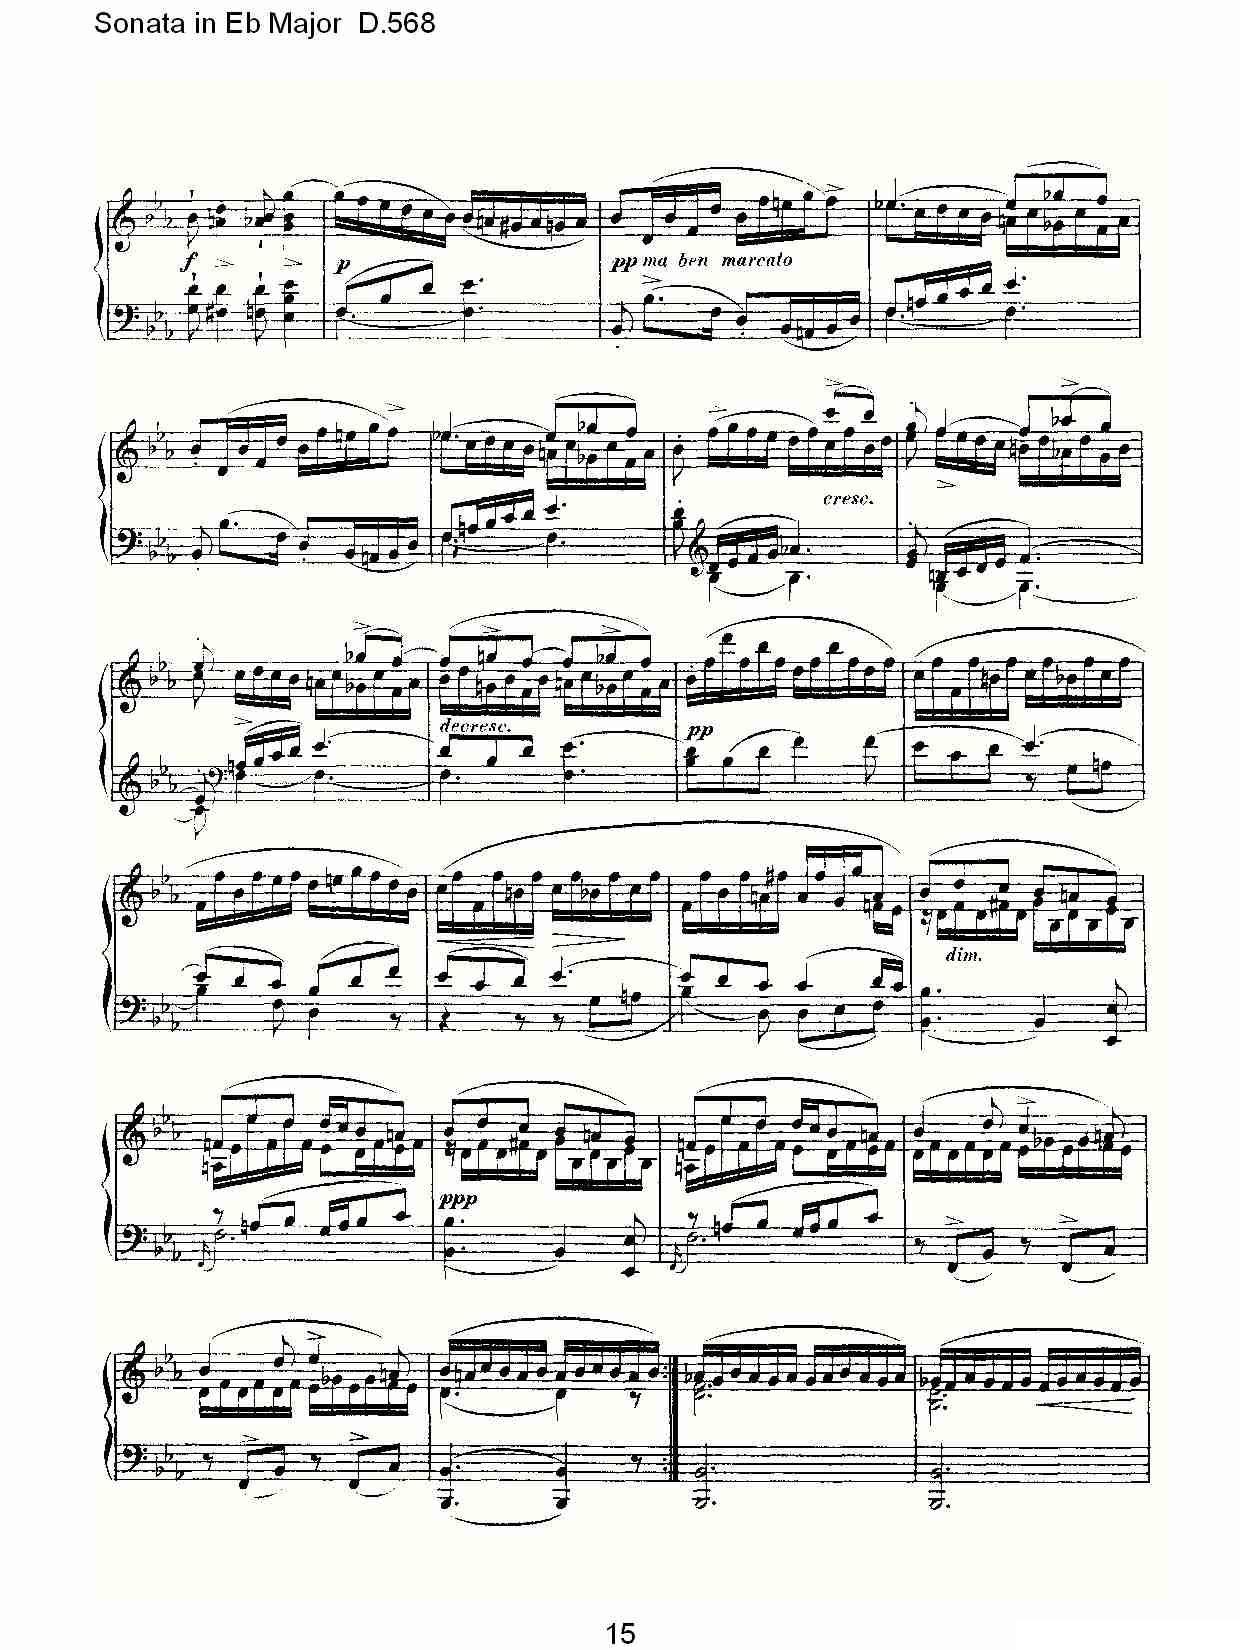 Sonata in Eb Major D.568（Eb大调奏鸣曲 D.568）钢琴曲谱（图15）